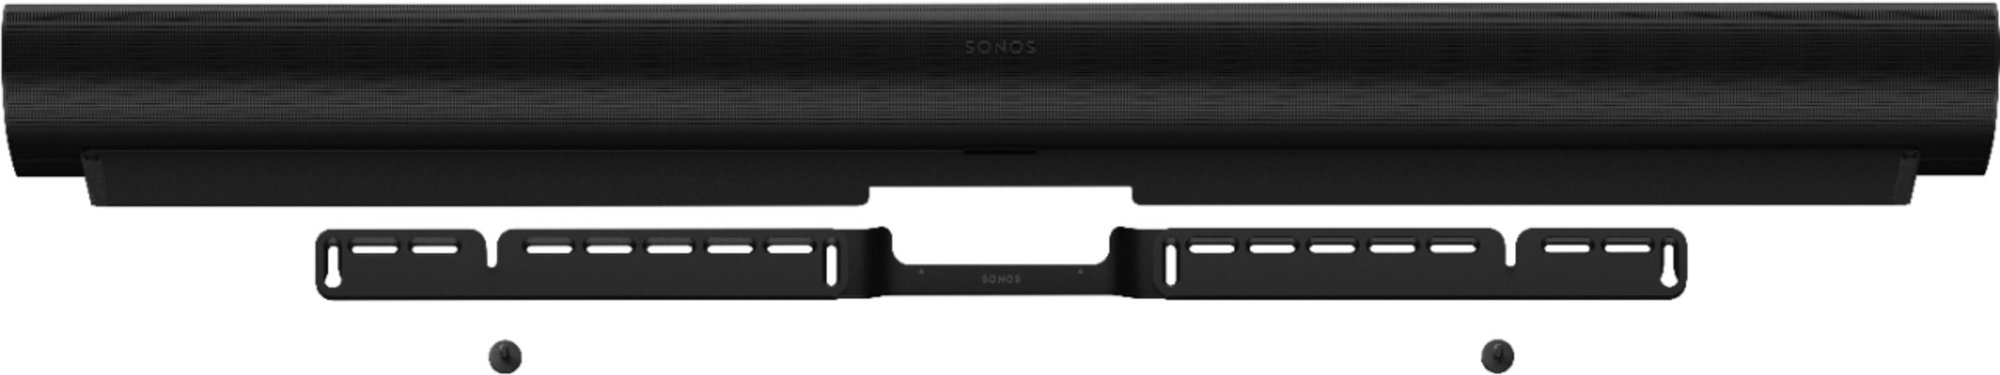 Sonos - Wall Mount for Arc - Black-Black